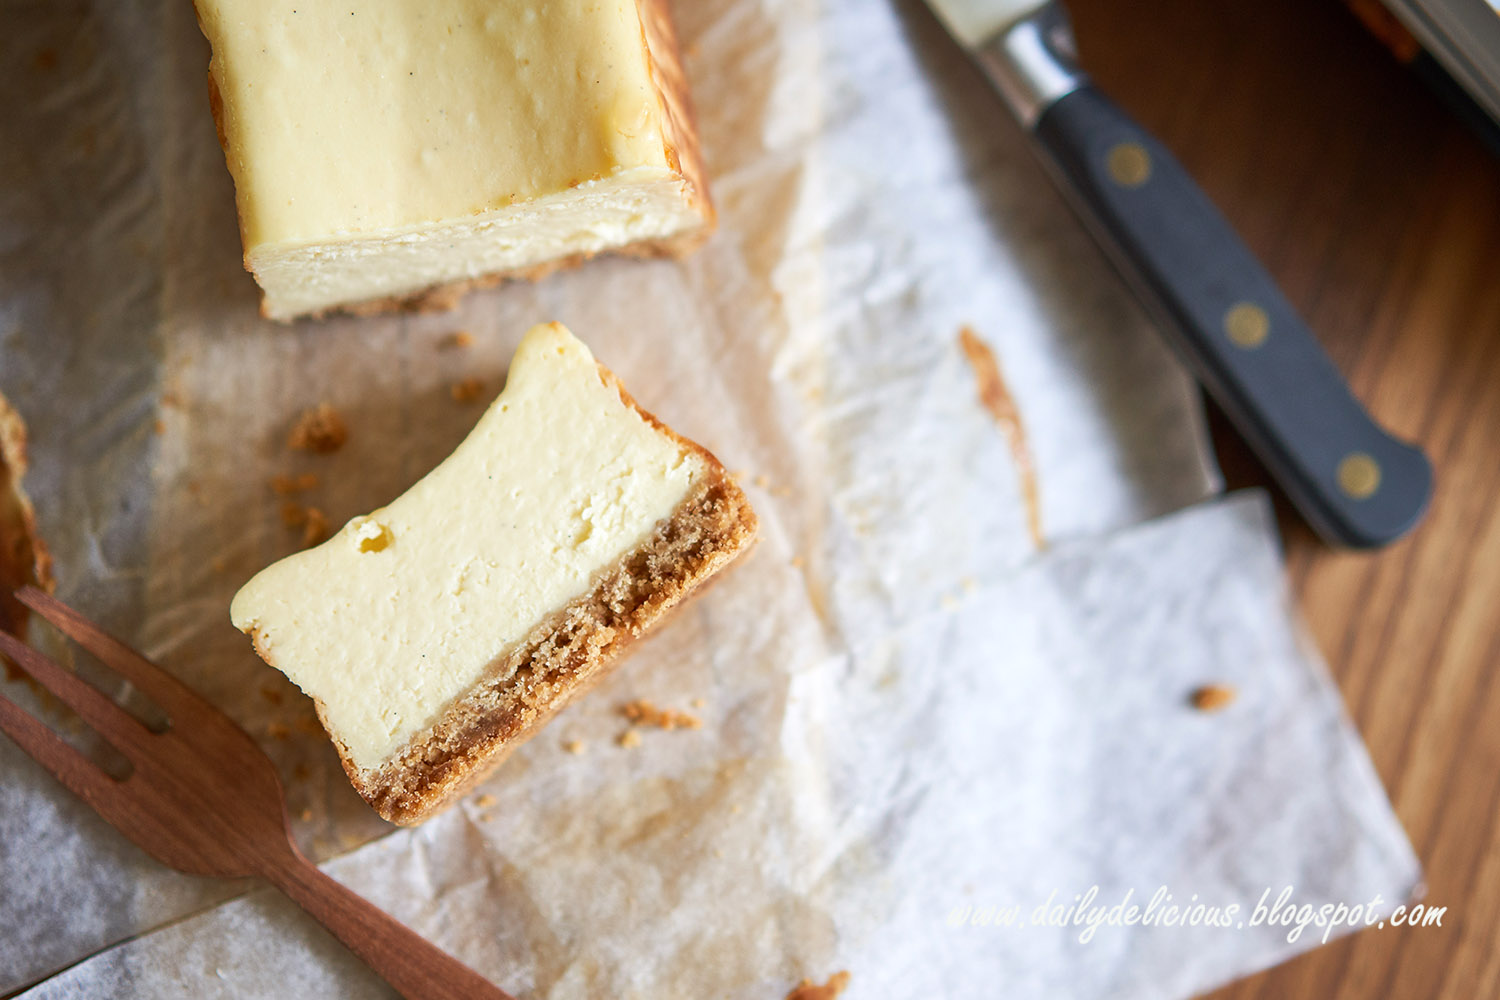 dailydelicious: Parmesan Cheesecake